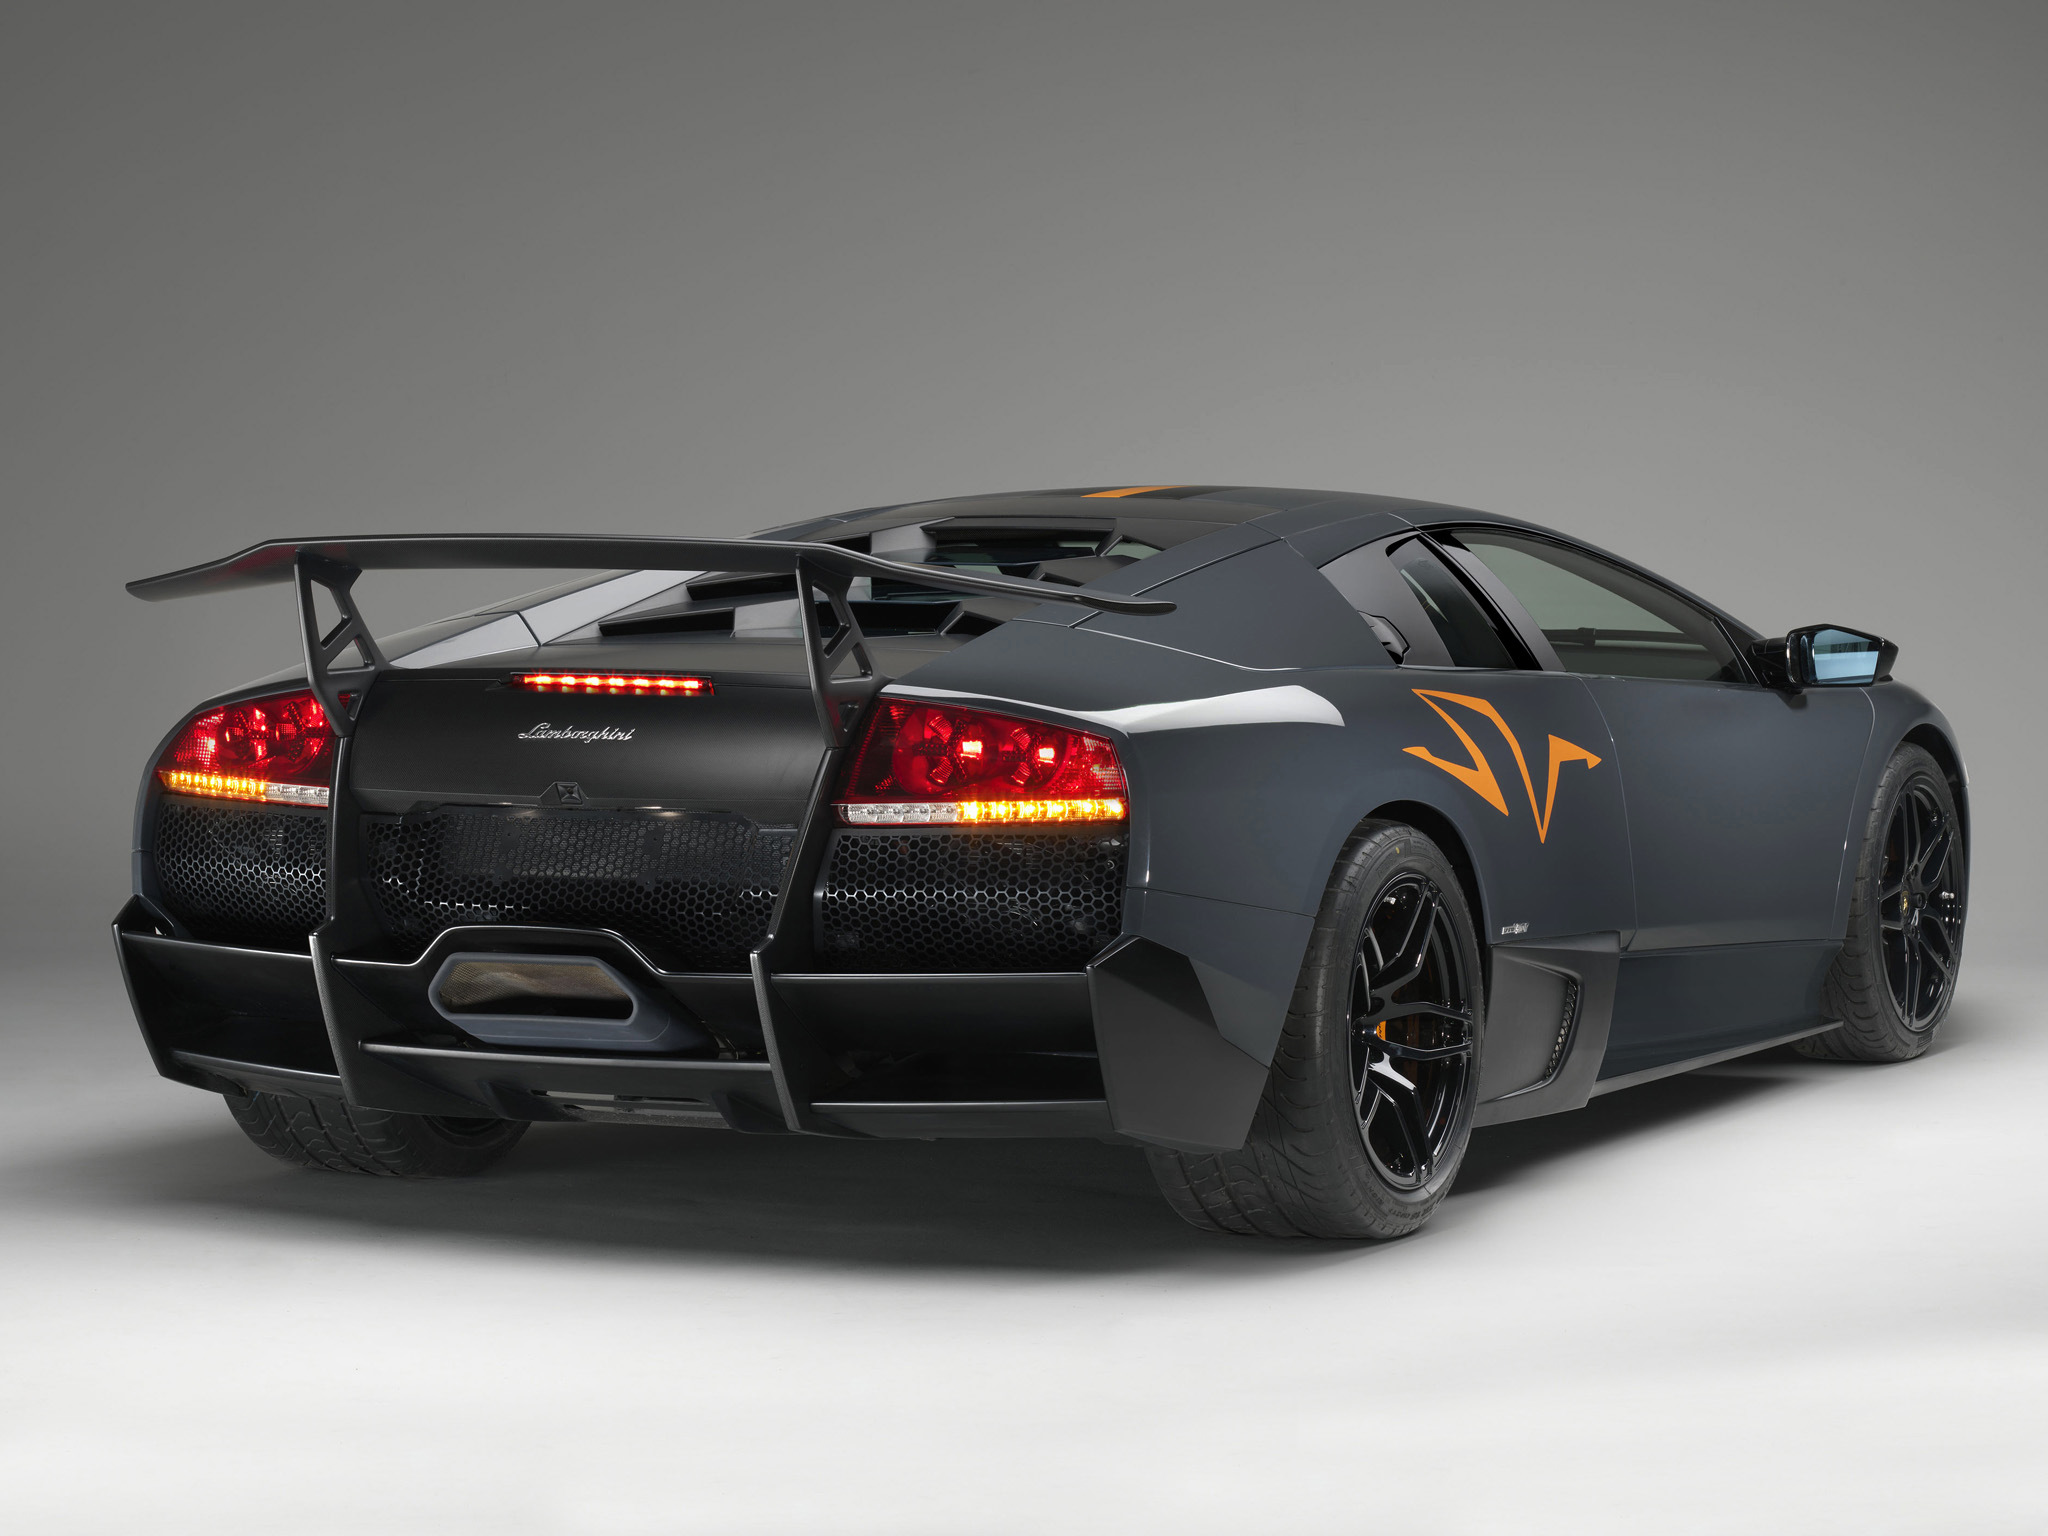 Download full size Lamborghini wallpaper / Cars / 2048x1536